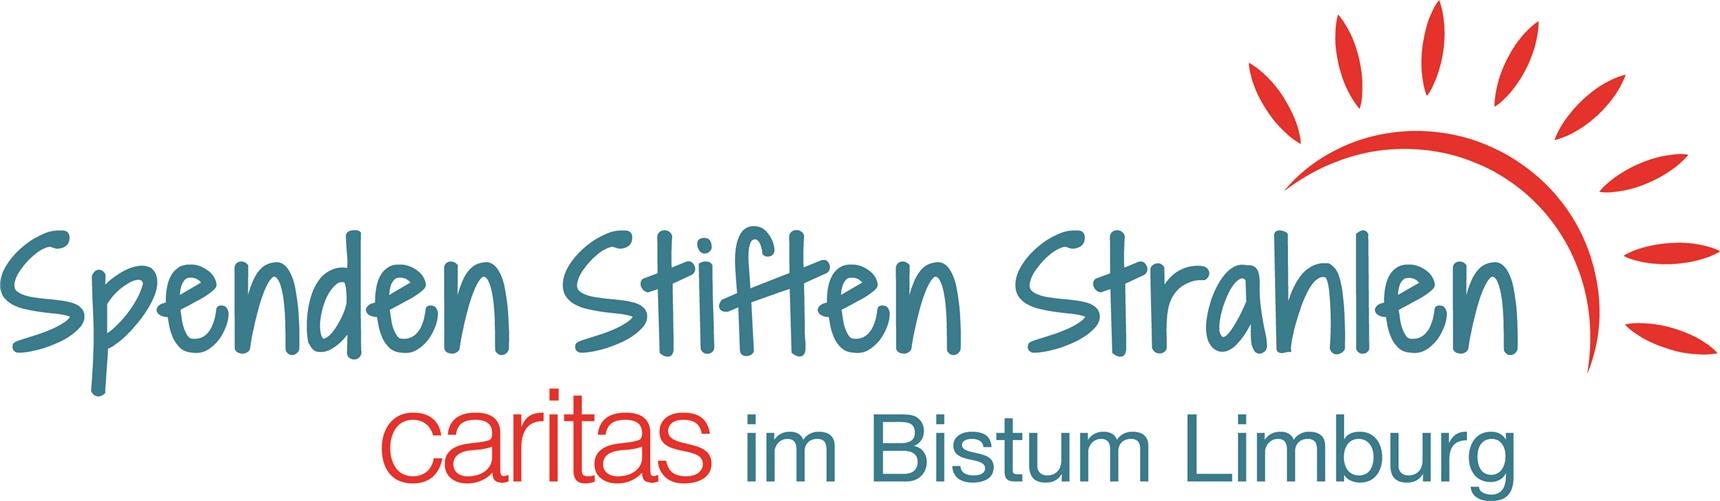 Spenden Stiften Strahlen Logo